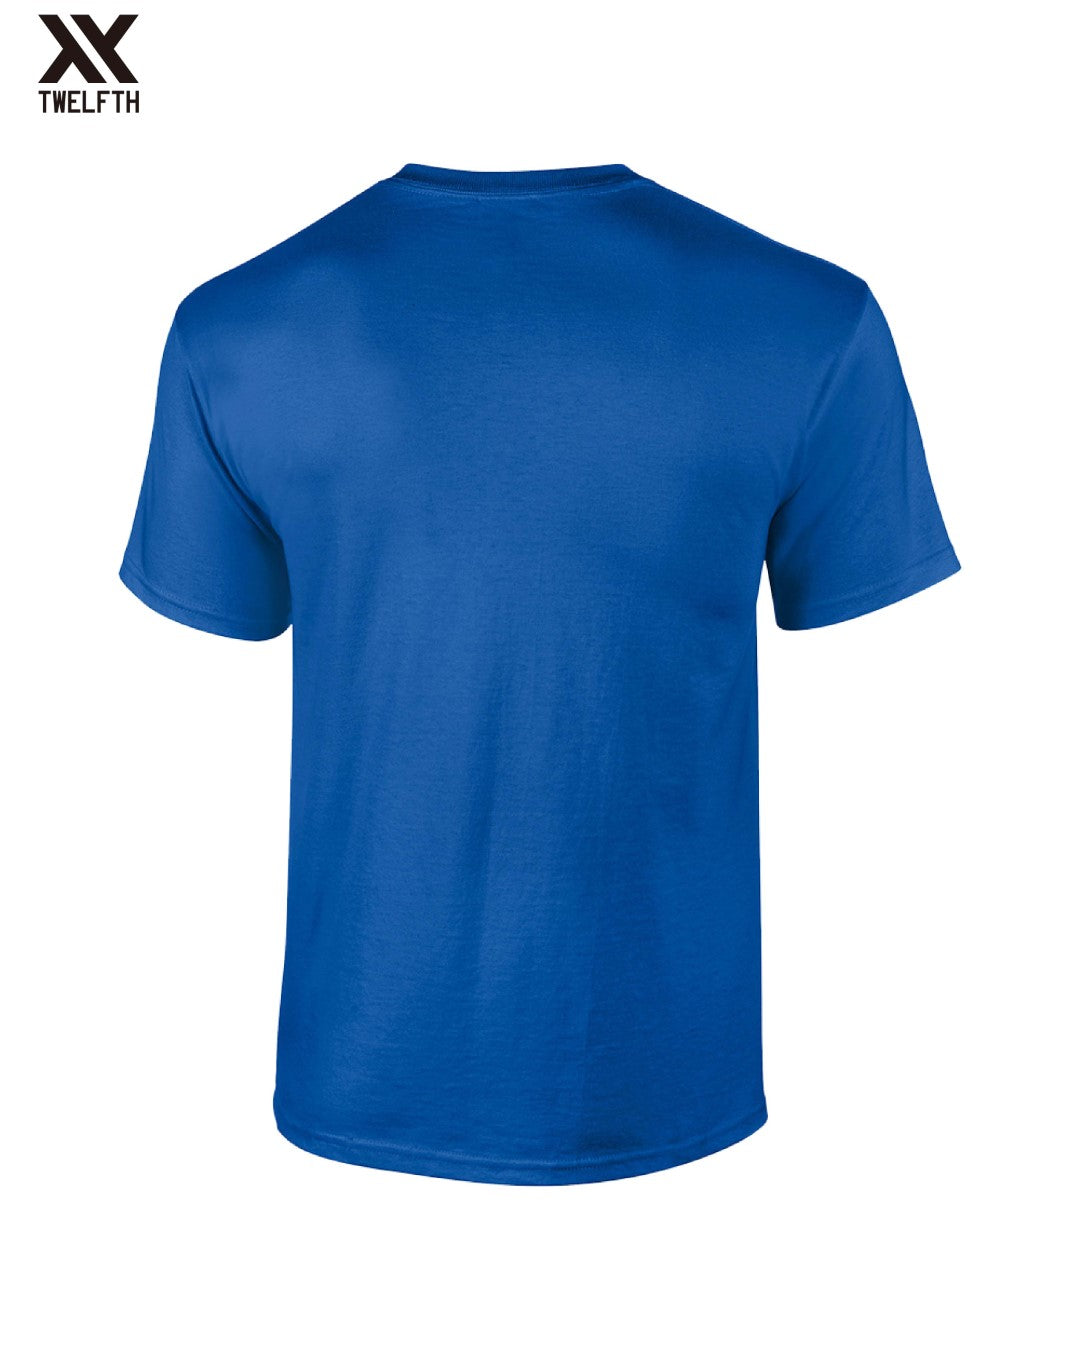 Sassuolo Crest T-Shirt - Mens